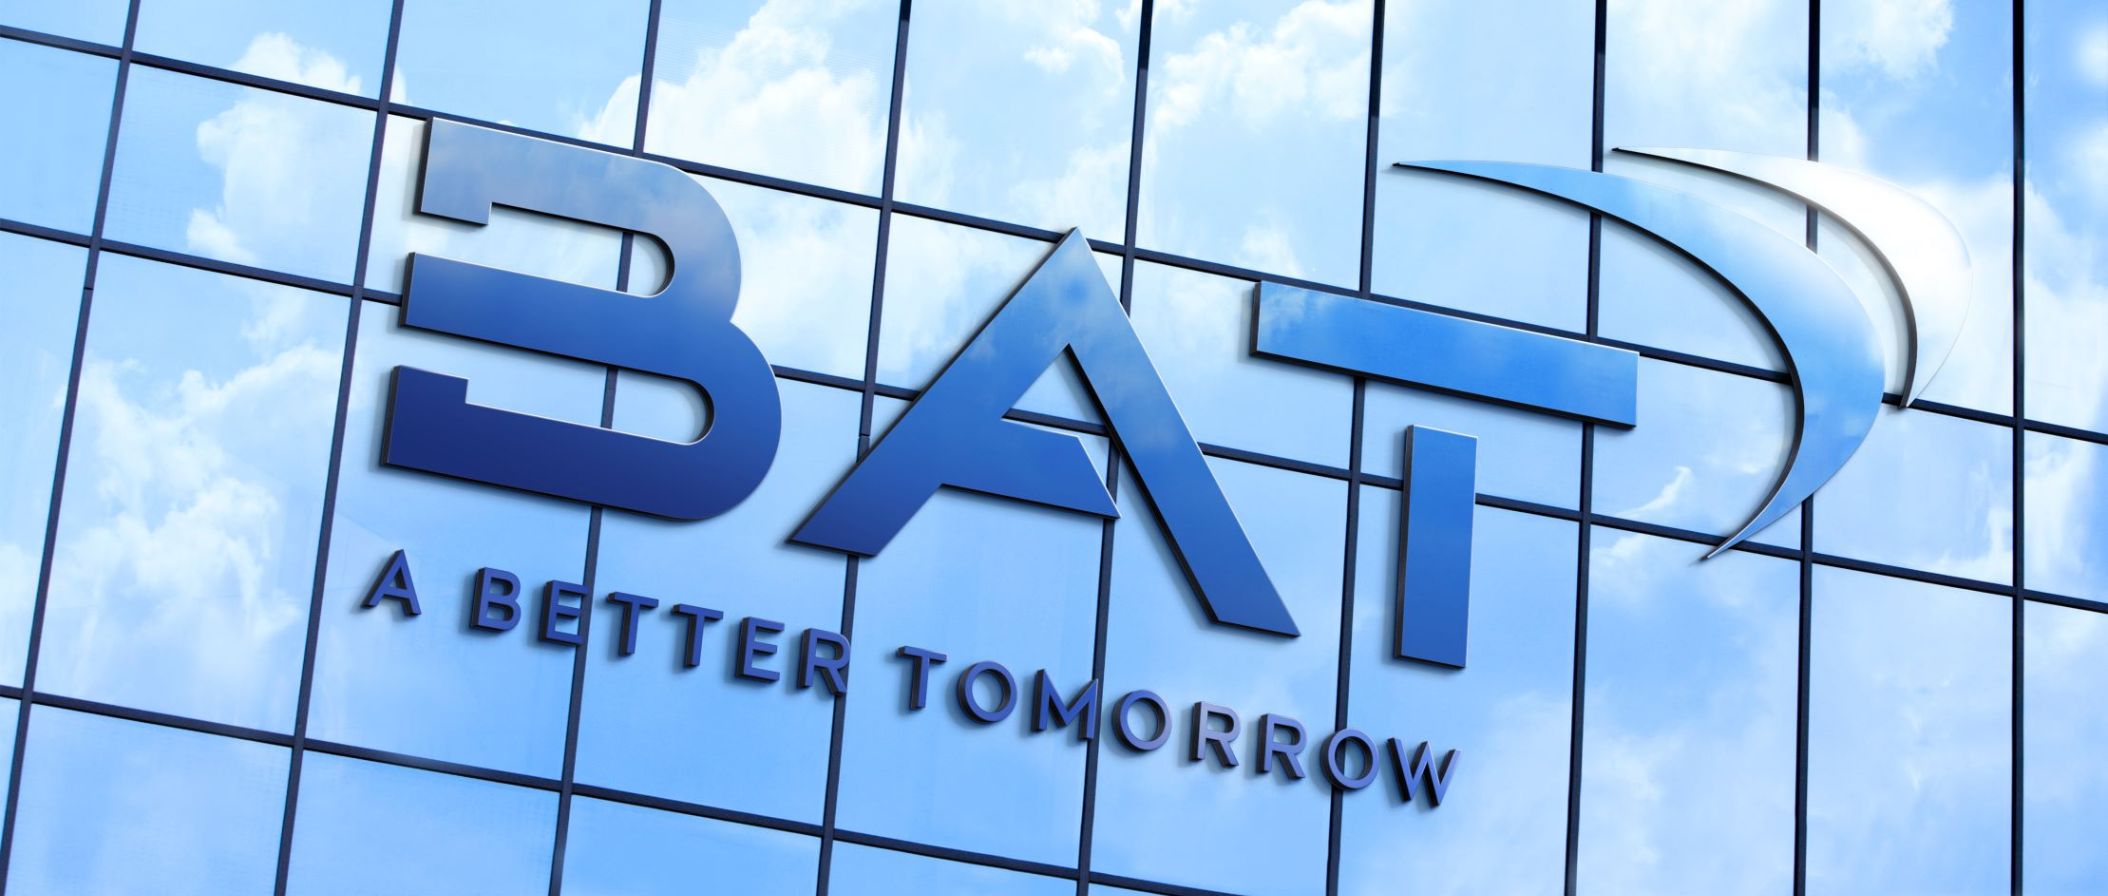 BAT Hungary starts partnership program to support environmen...